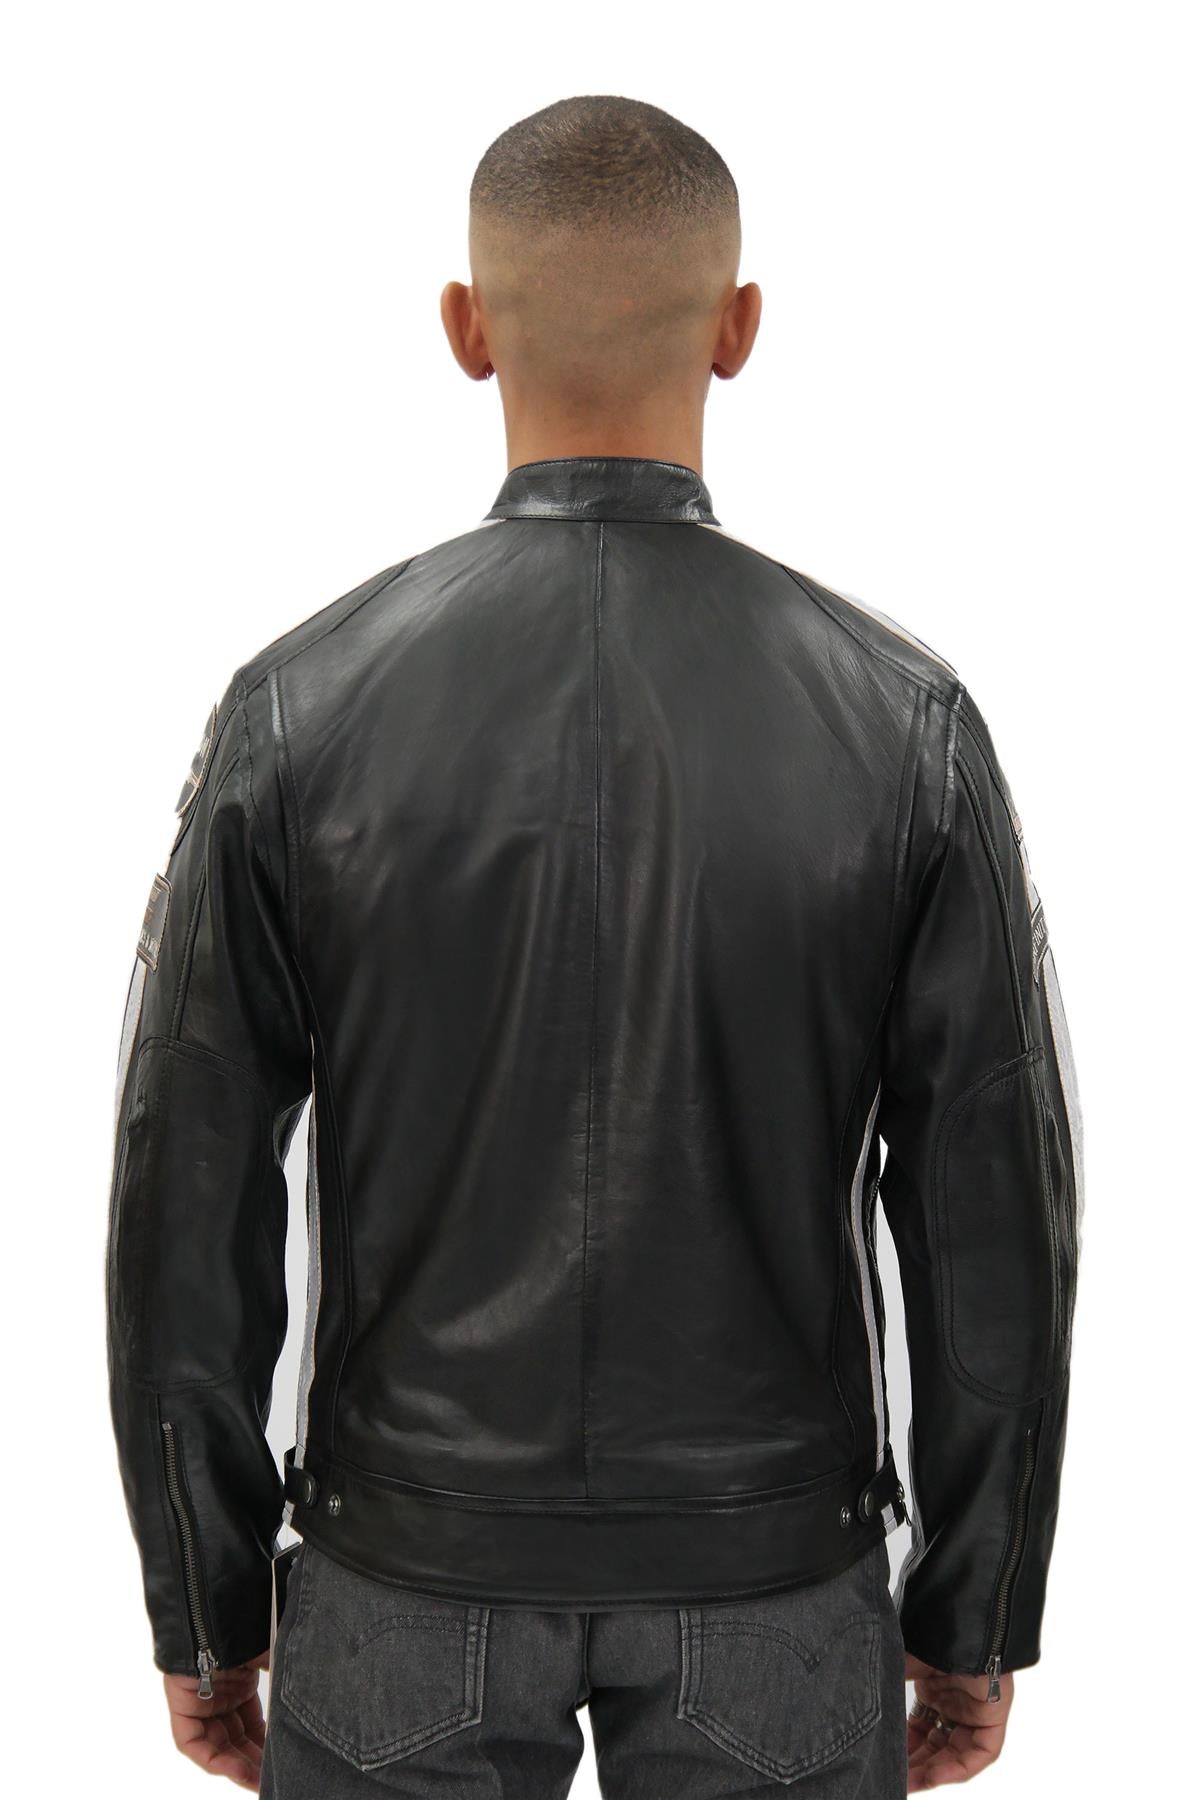 Mens Racing Leather Biker Jacket-Portland